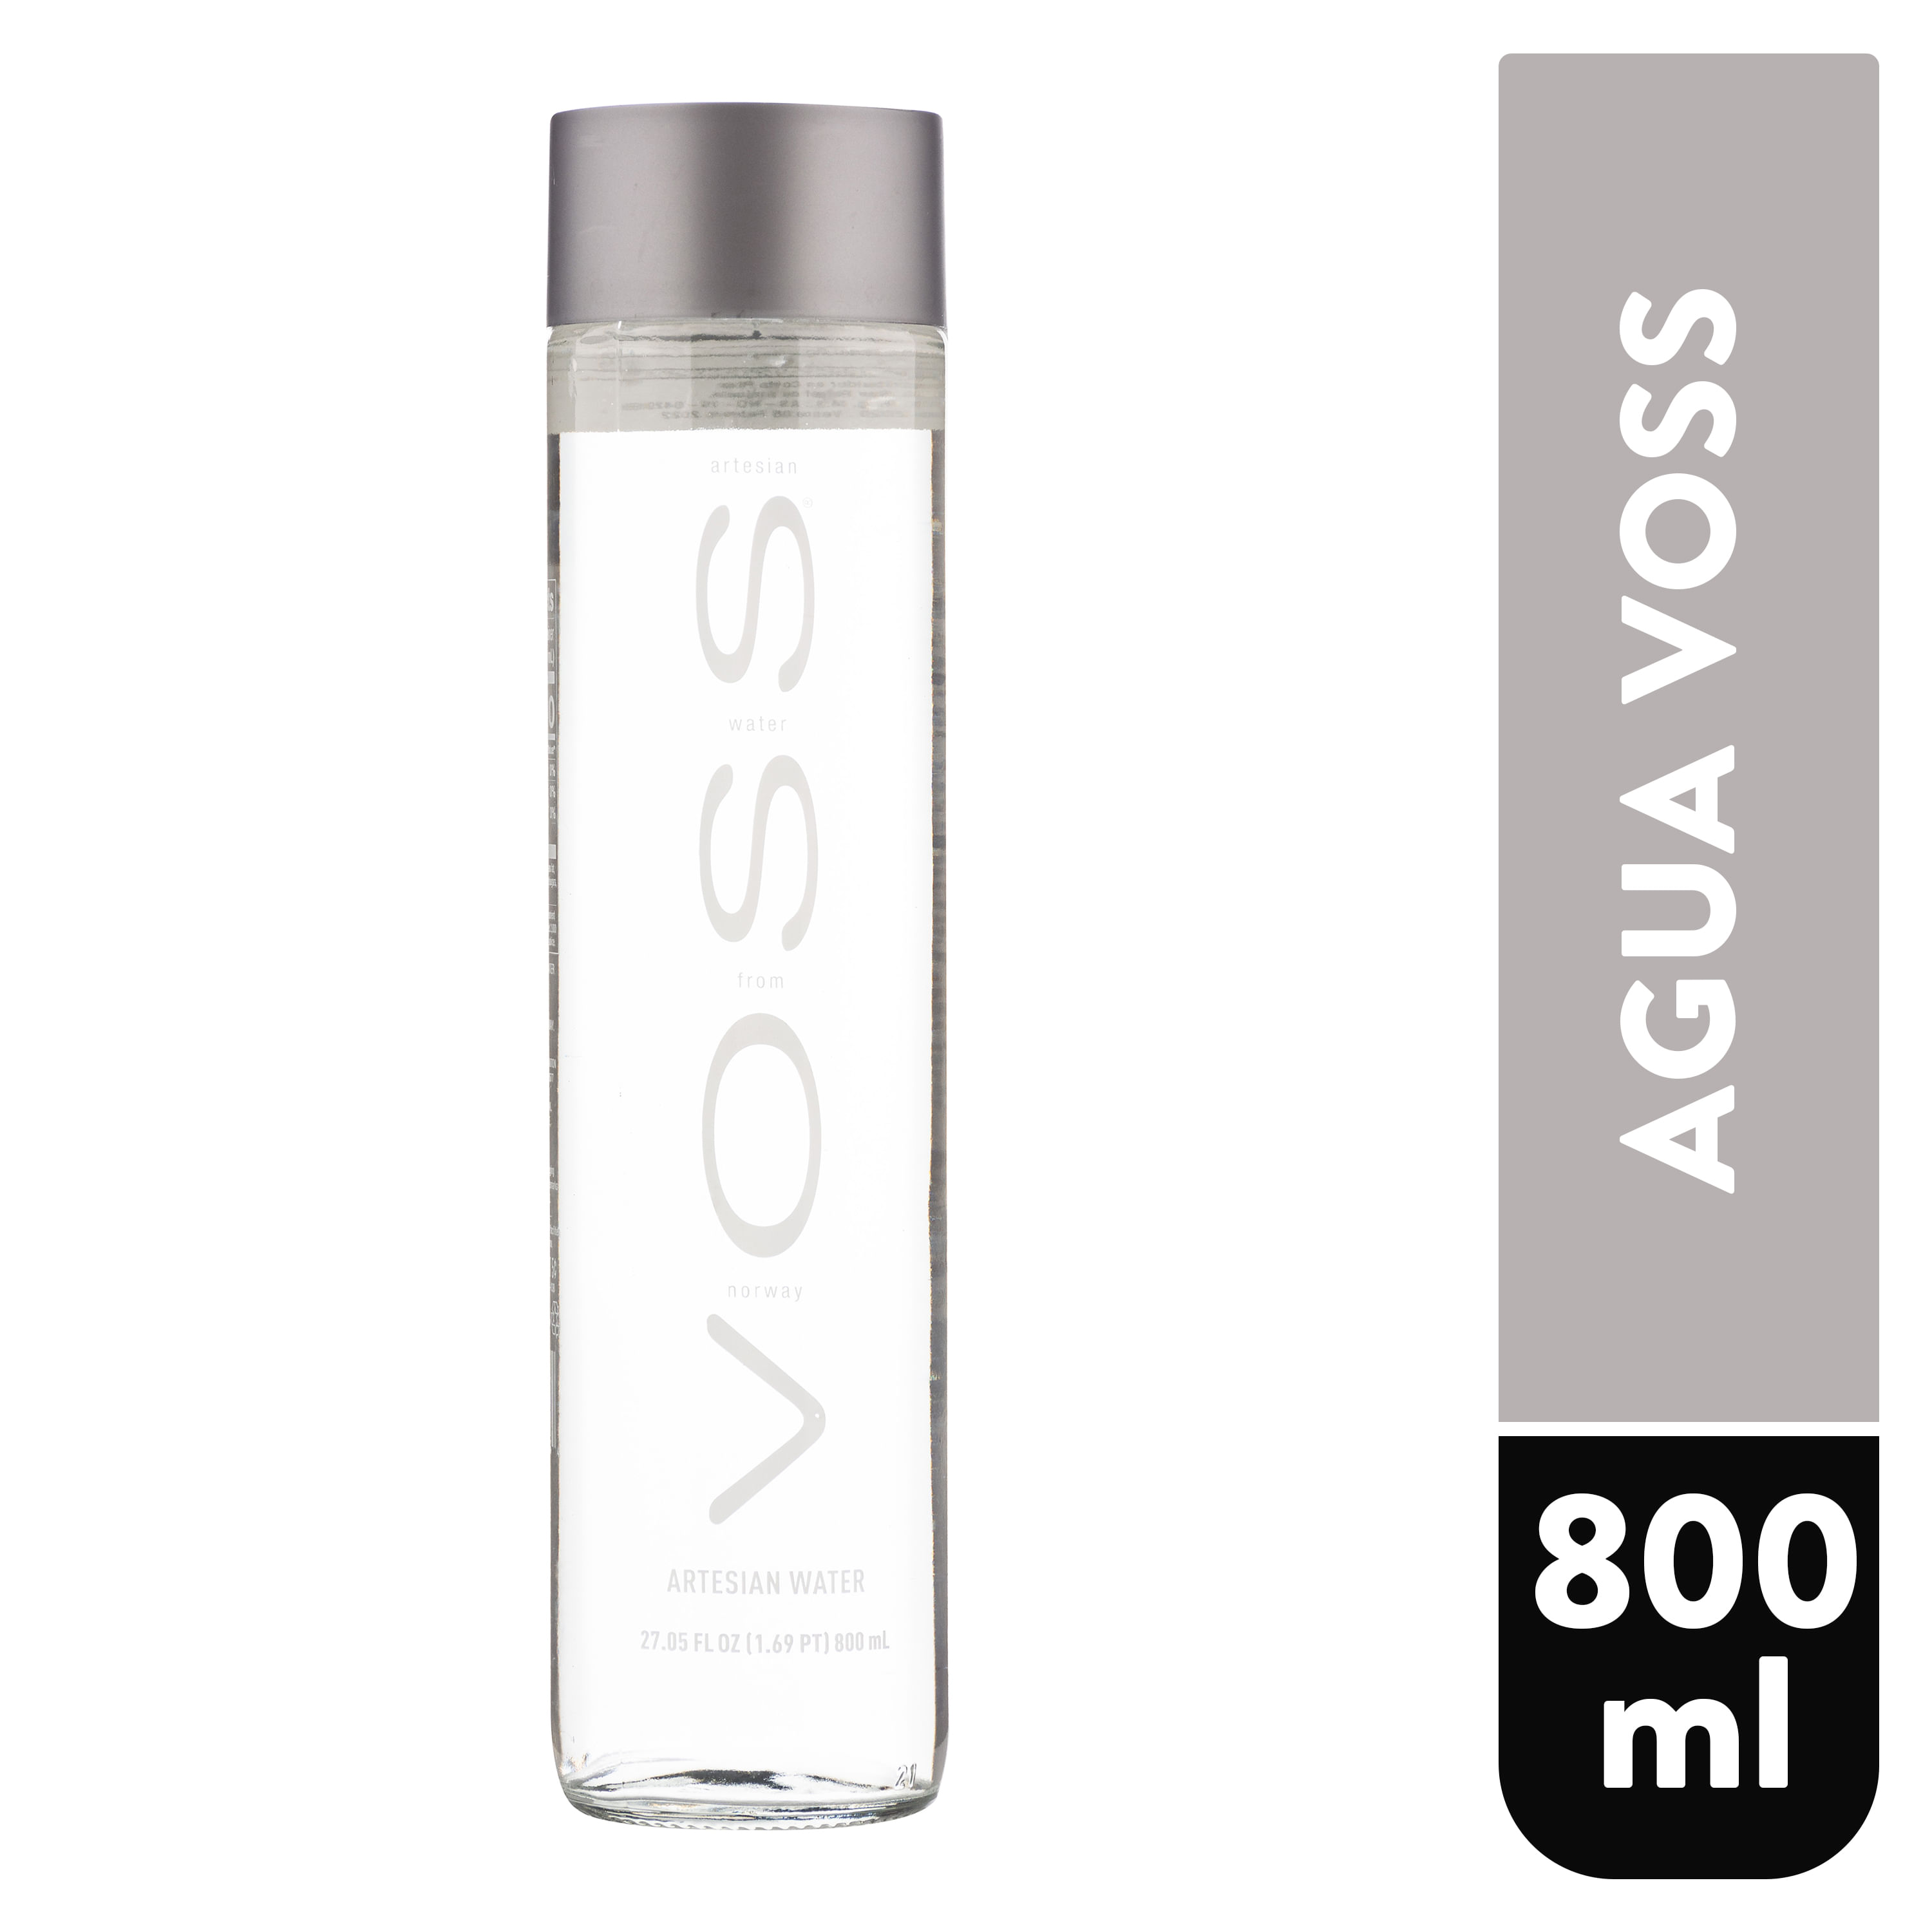 Comprar Agua Voss - 375ml, Walmart Costa Rica - Maxi Palí